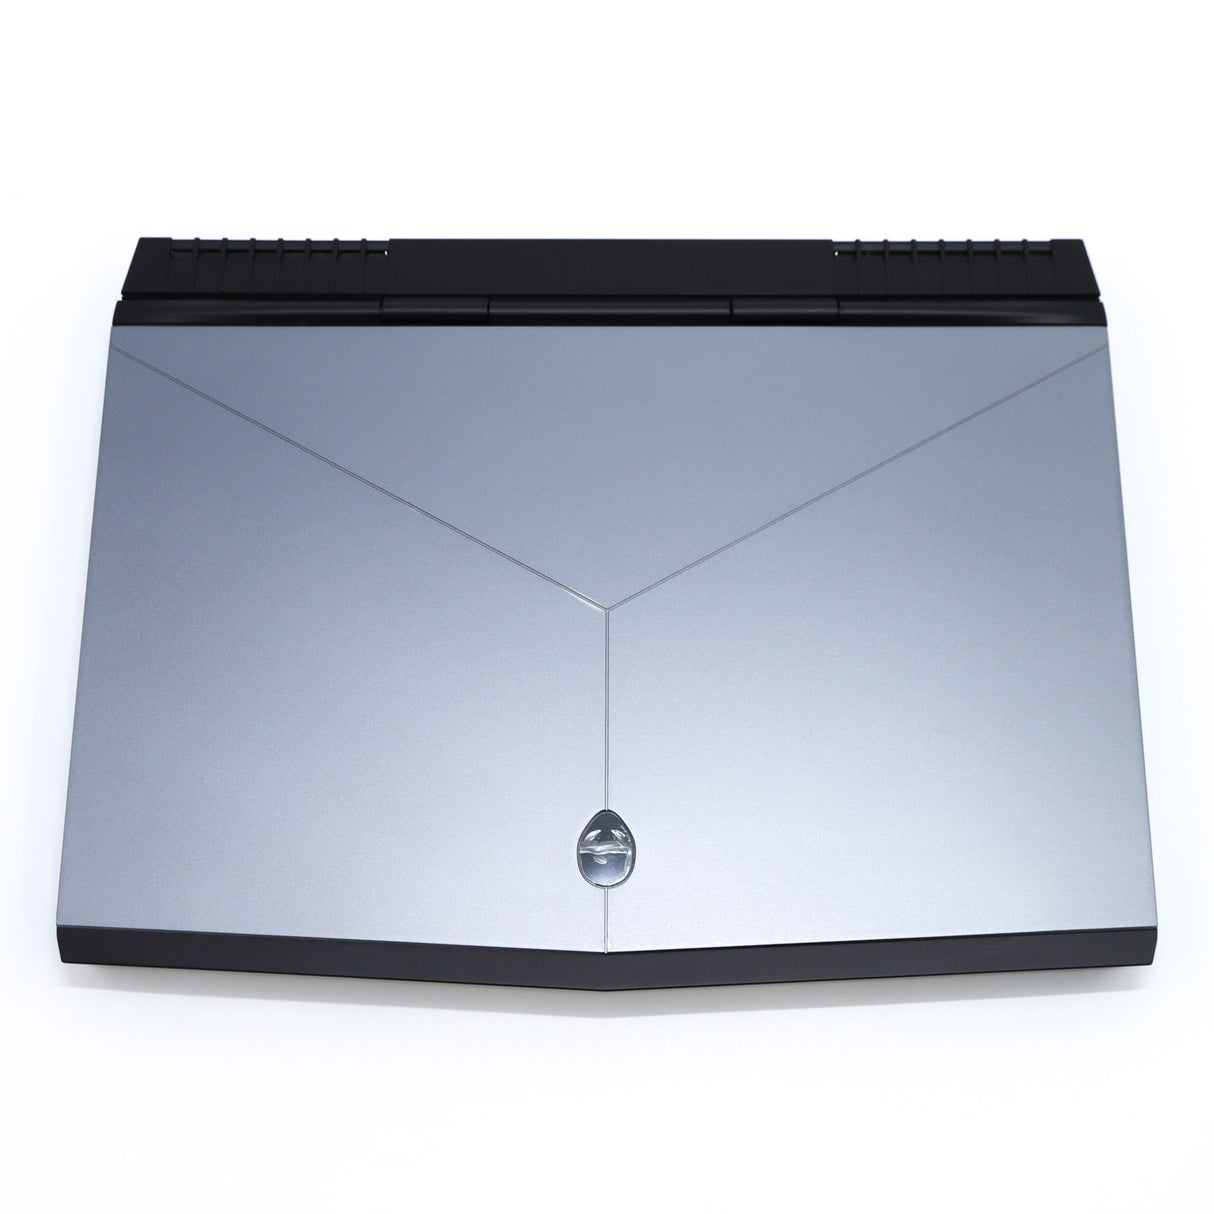 Alienware 15 R3 Gaming Laptop: 7th Gen i5, 256GB+1TB, 16GB, GTX 1060, Warranty - GreenGreen Store